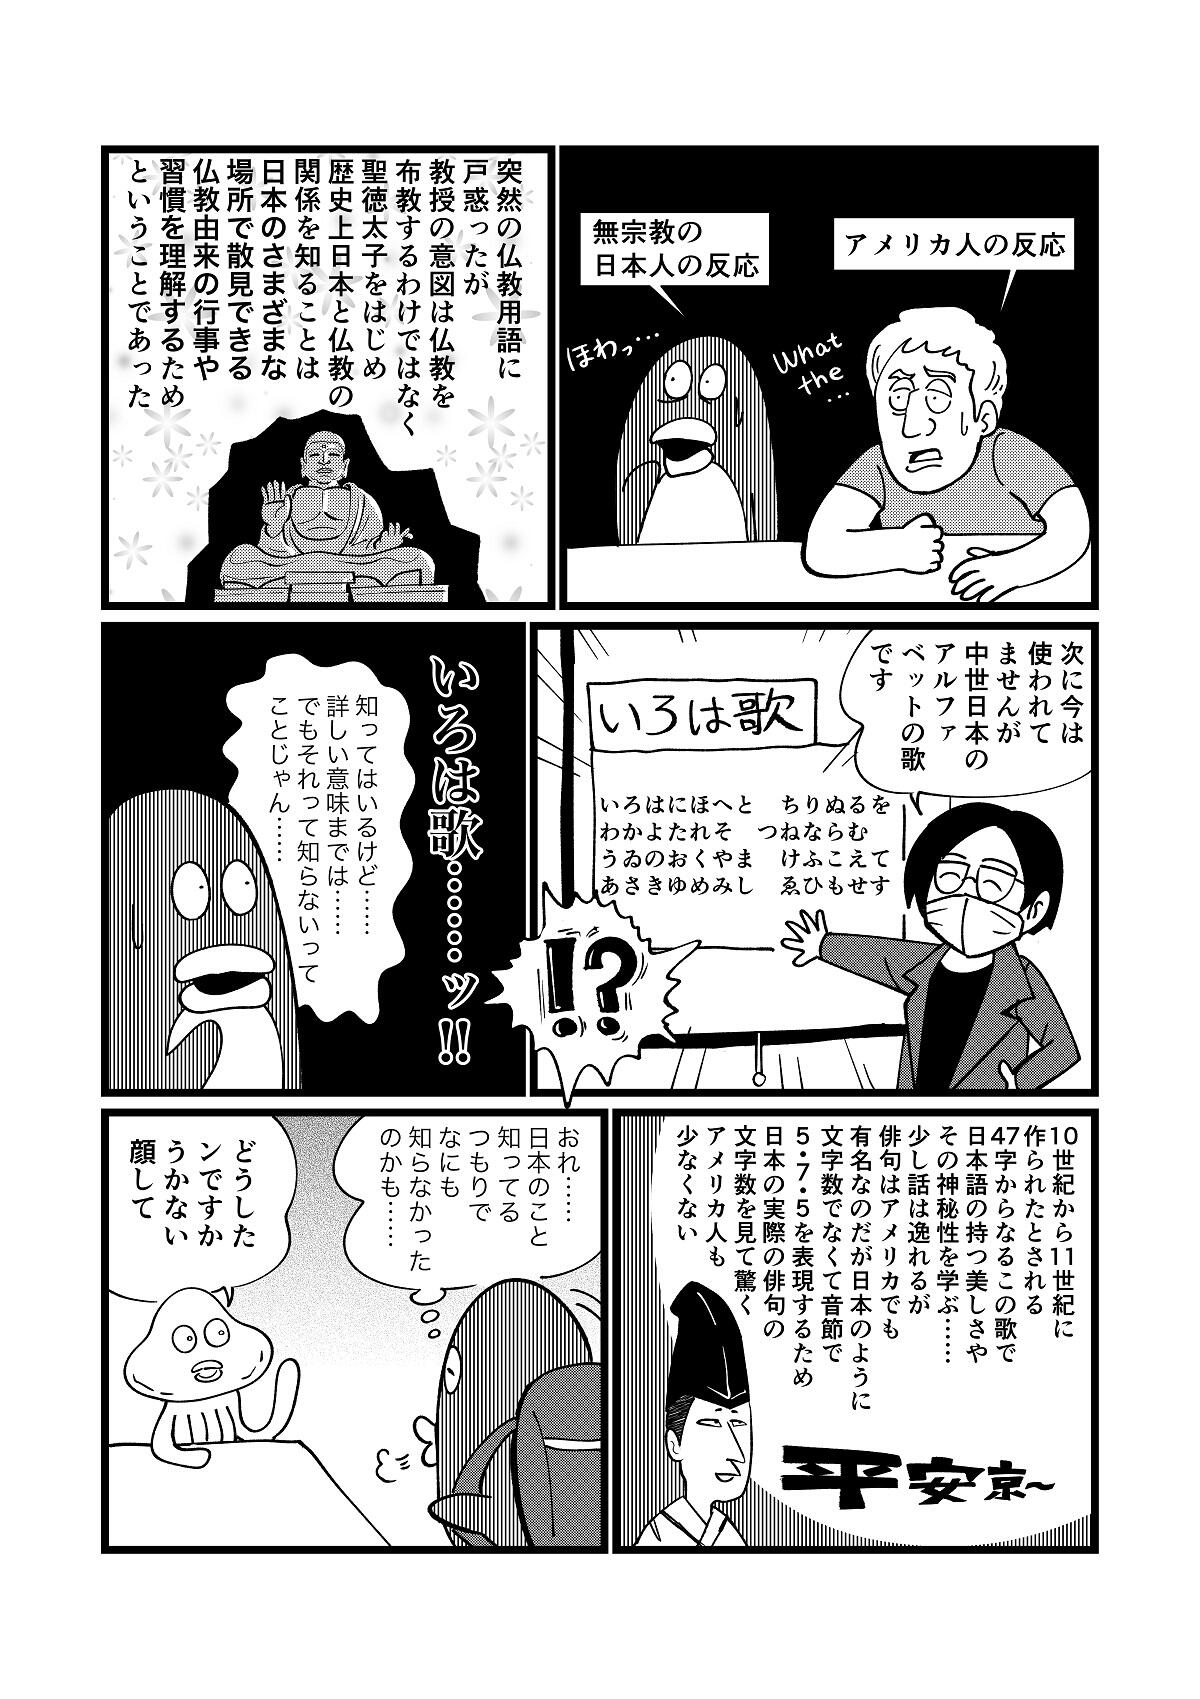 https://www.ryugaku.co.jp/column/images/jawamura20_2_1200.jpg